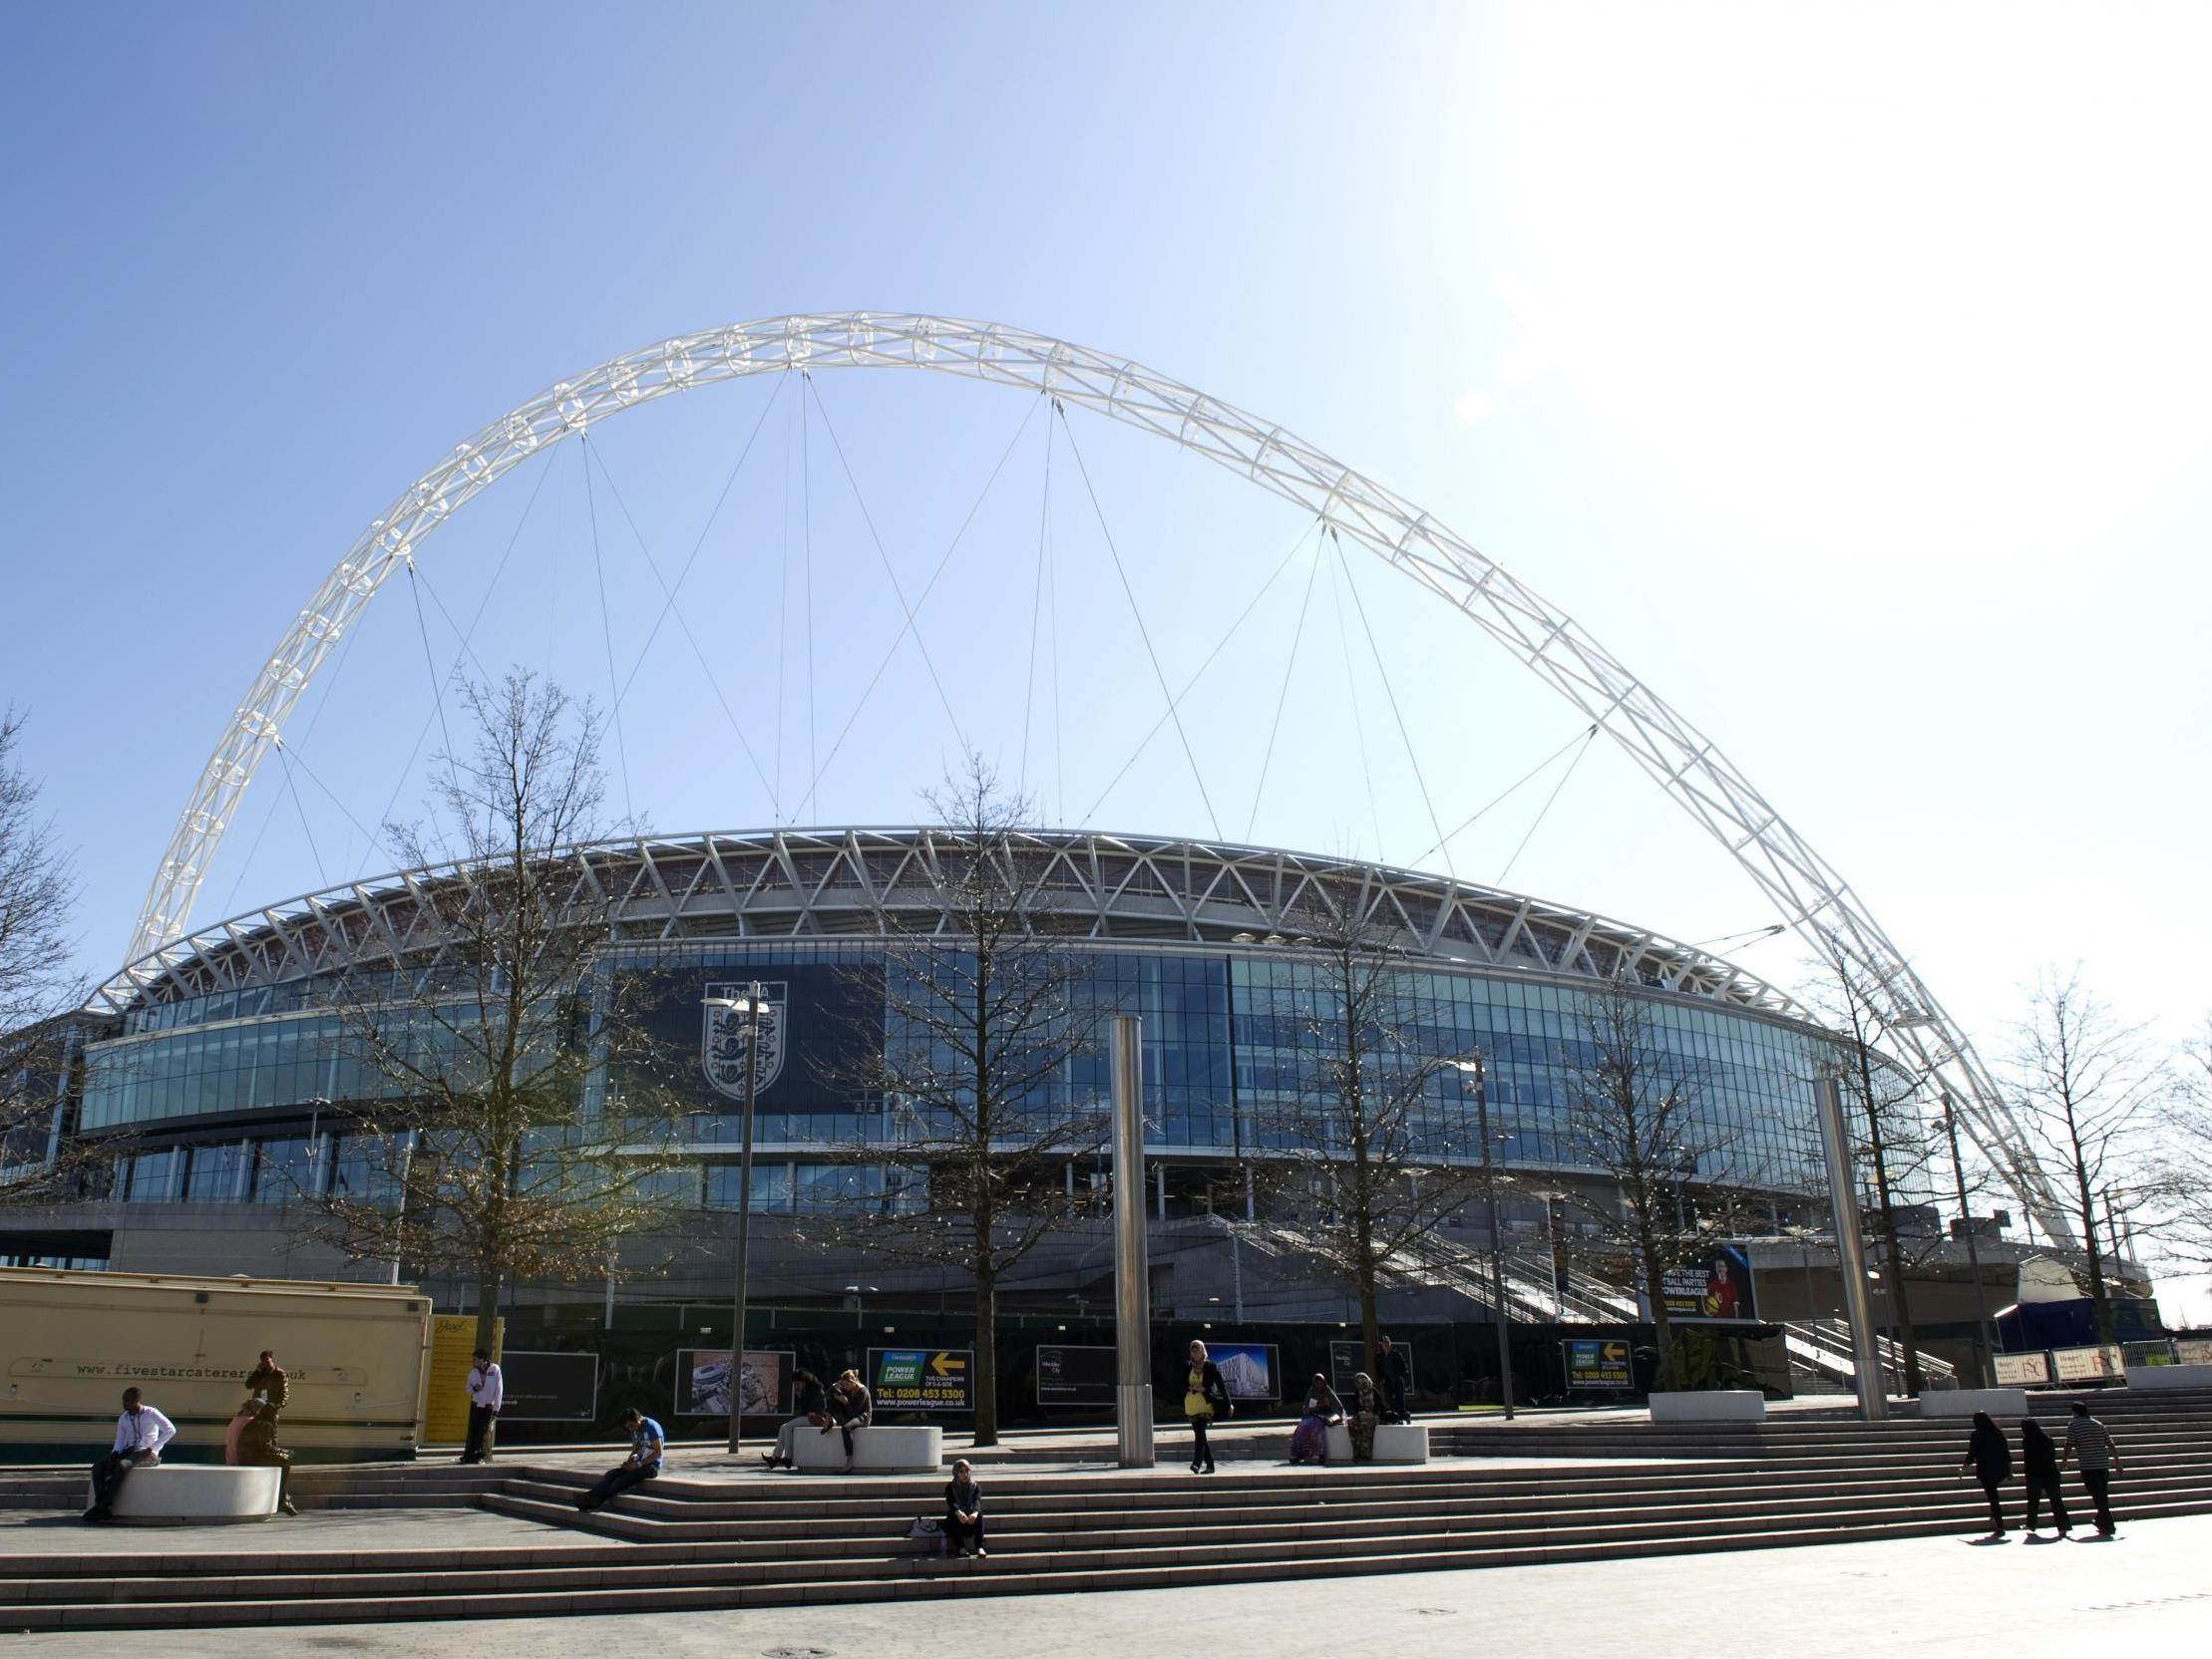 Wembley, the national football stadium